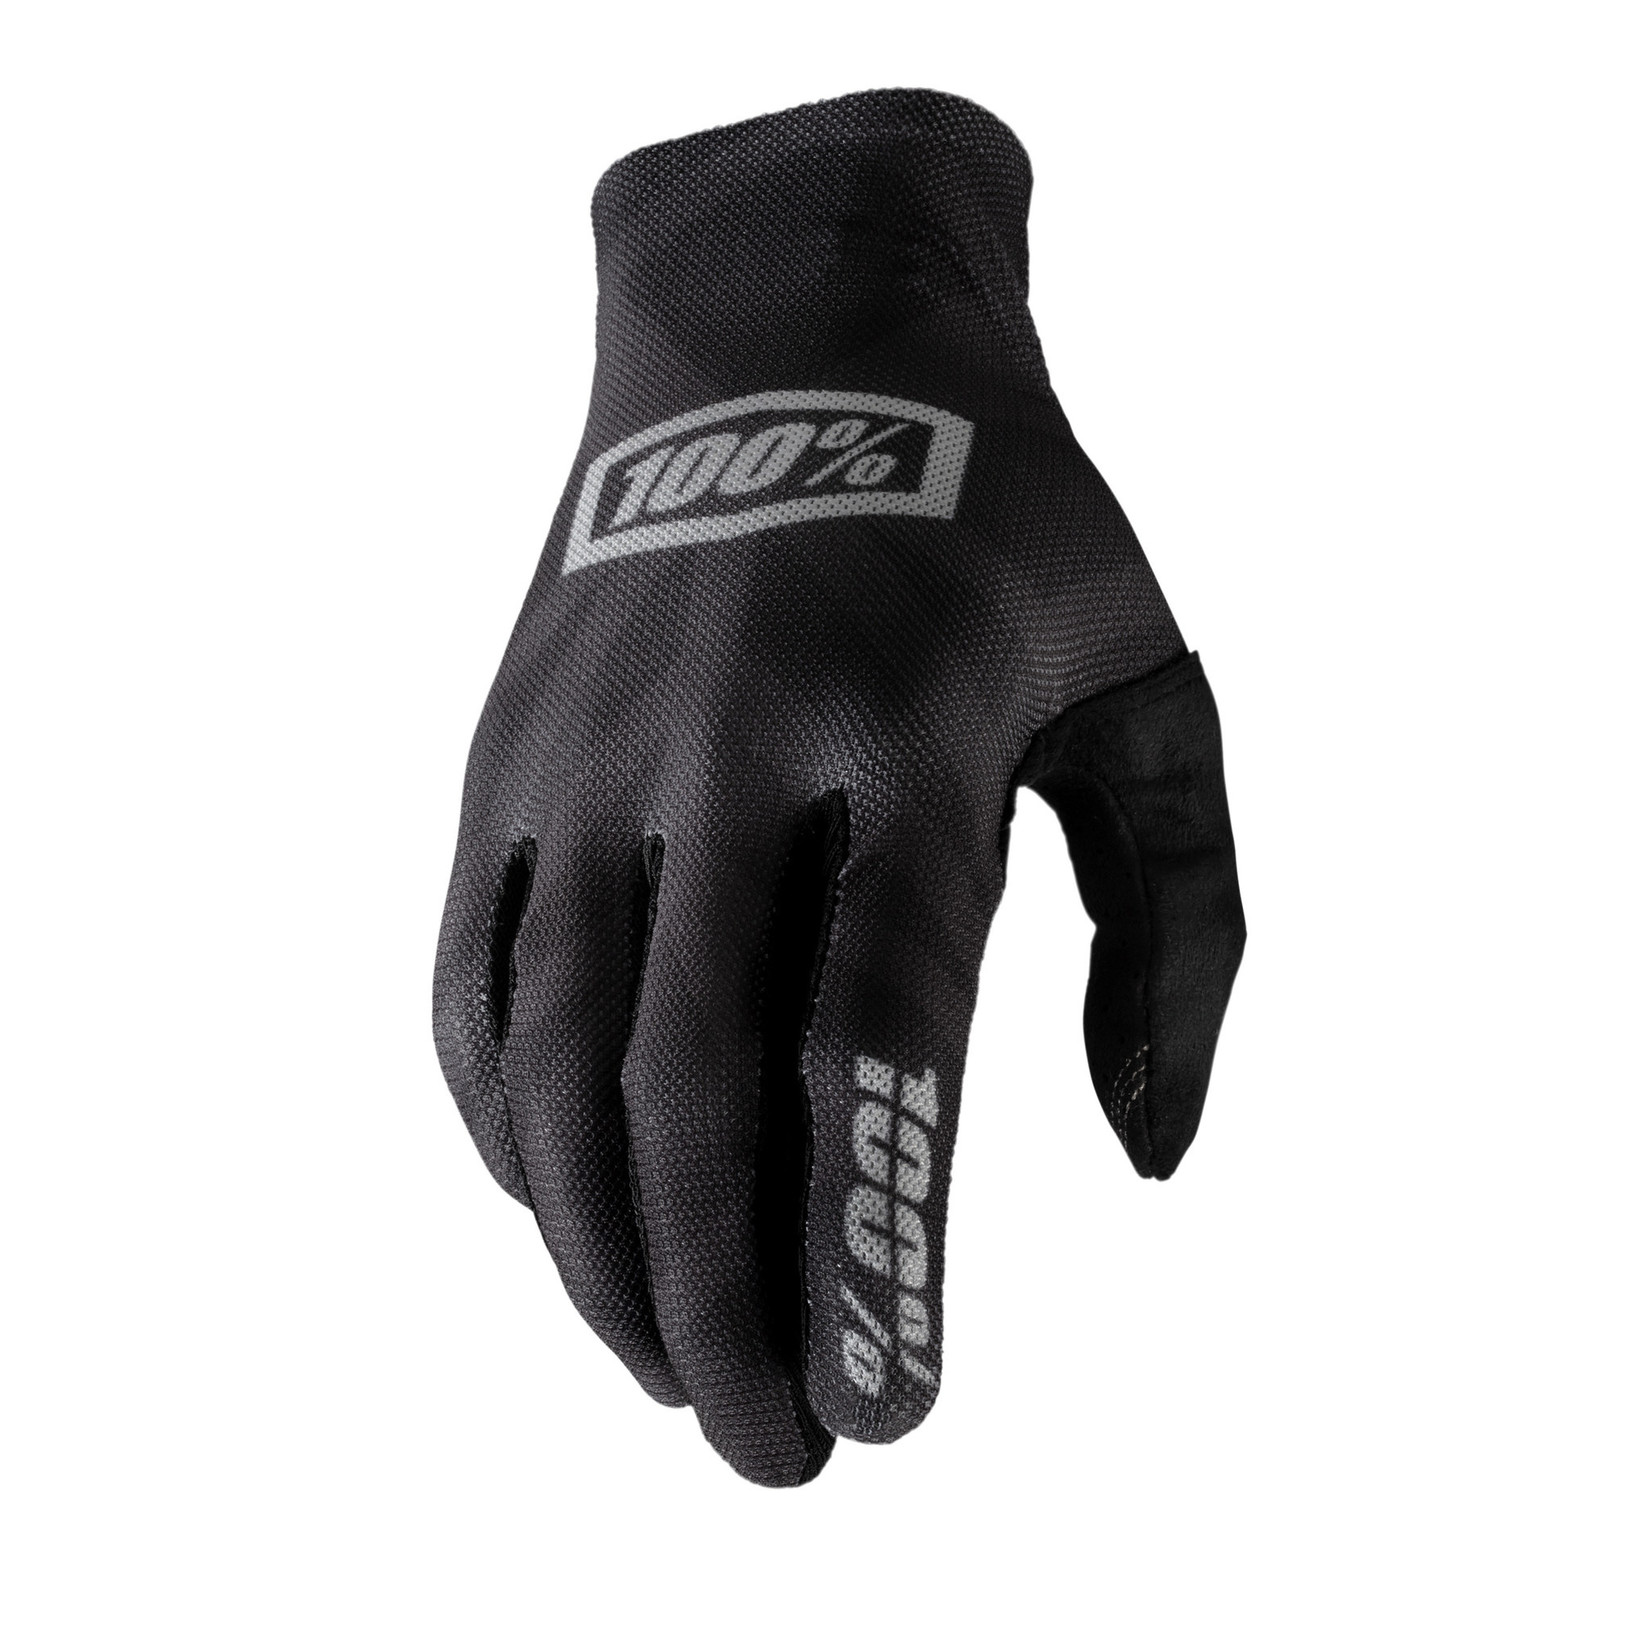 100% CELIUM Cycling Glove - Black/Silver